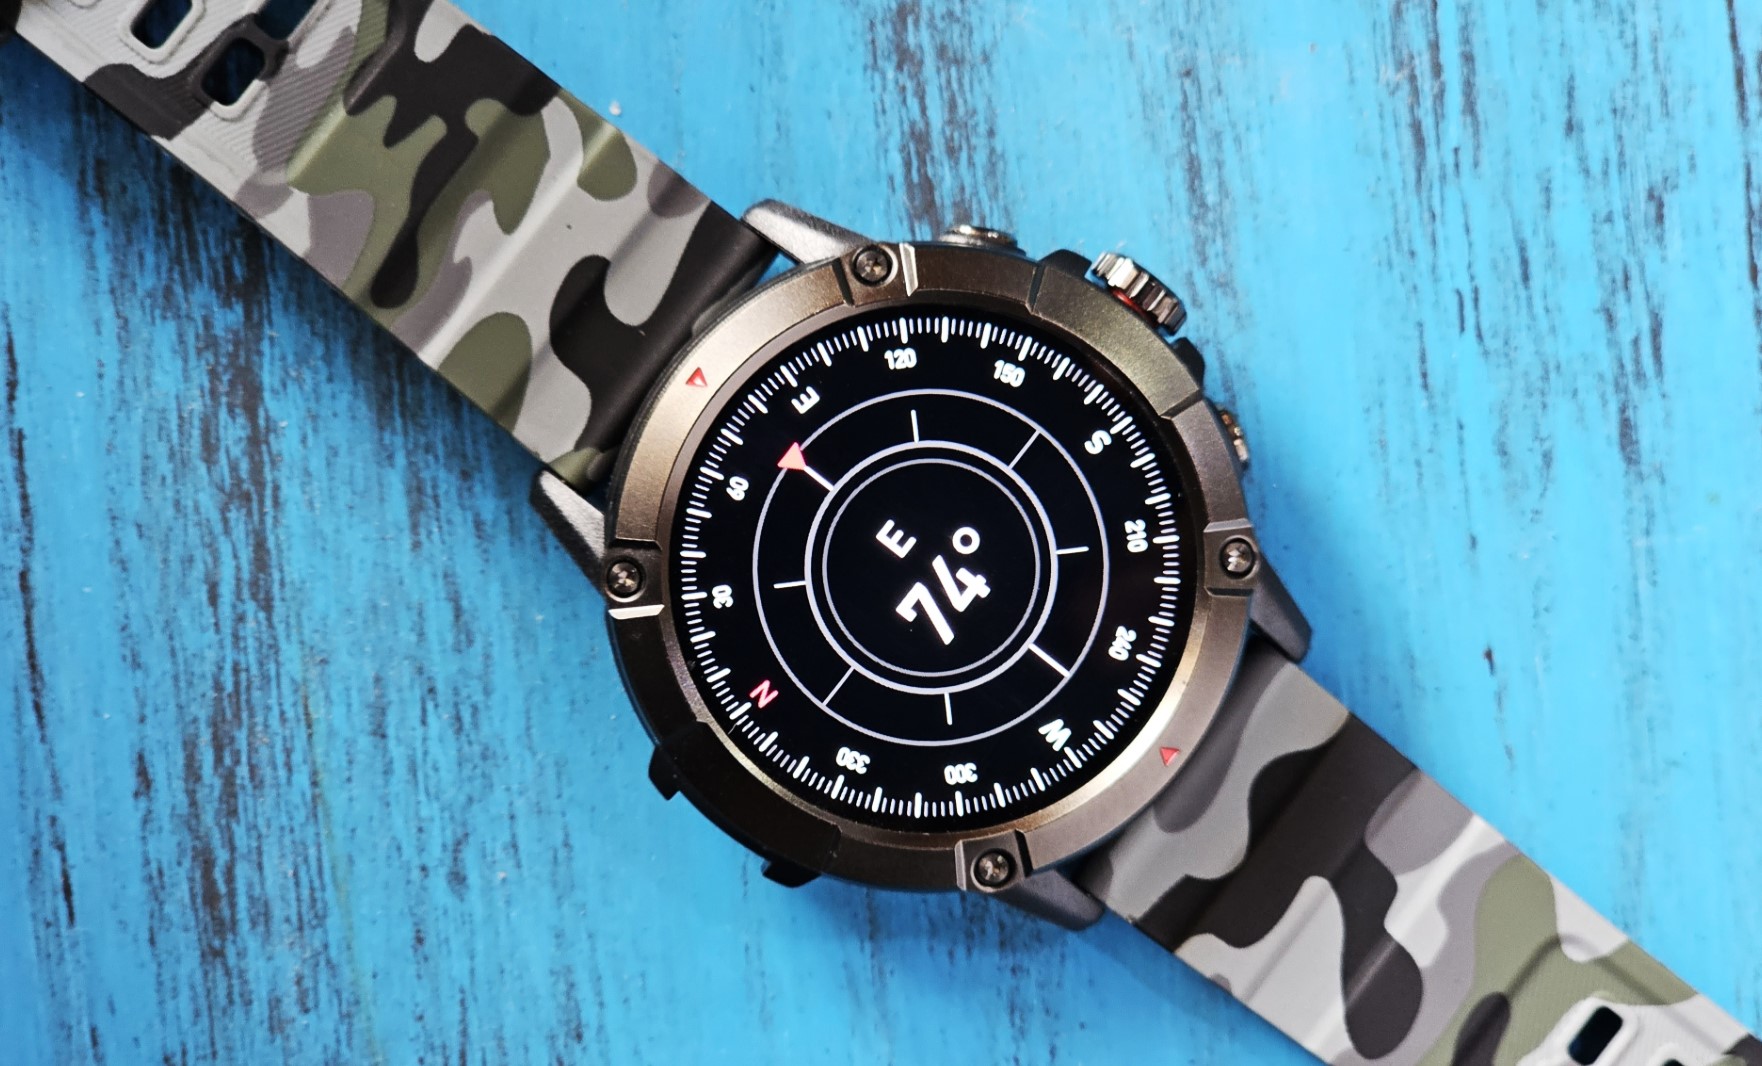 Ambrane wise crest pro smartwatch review techarc